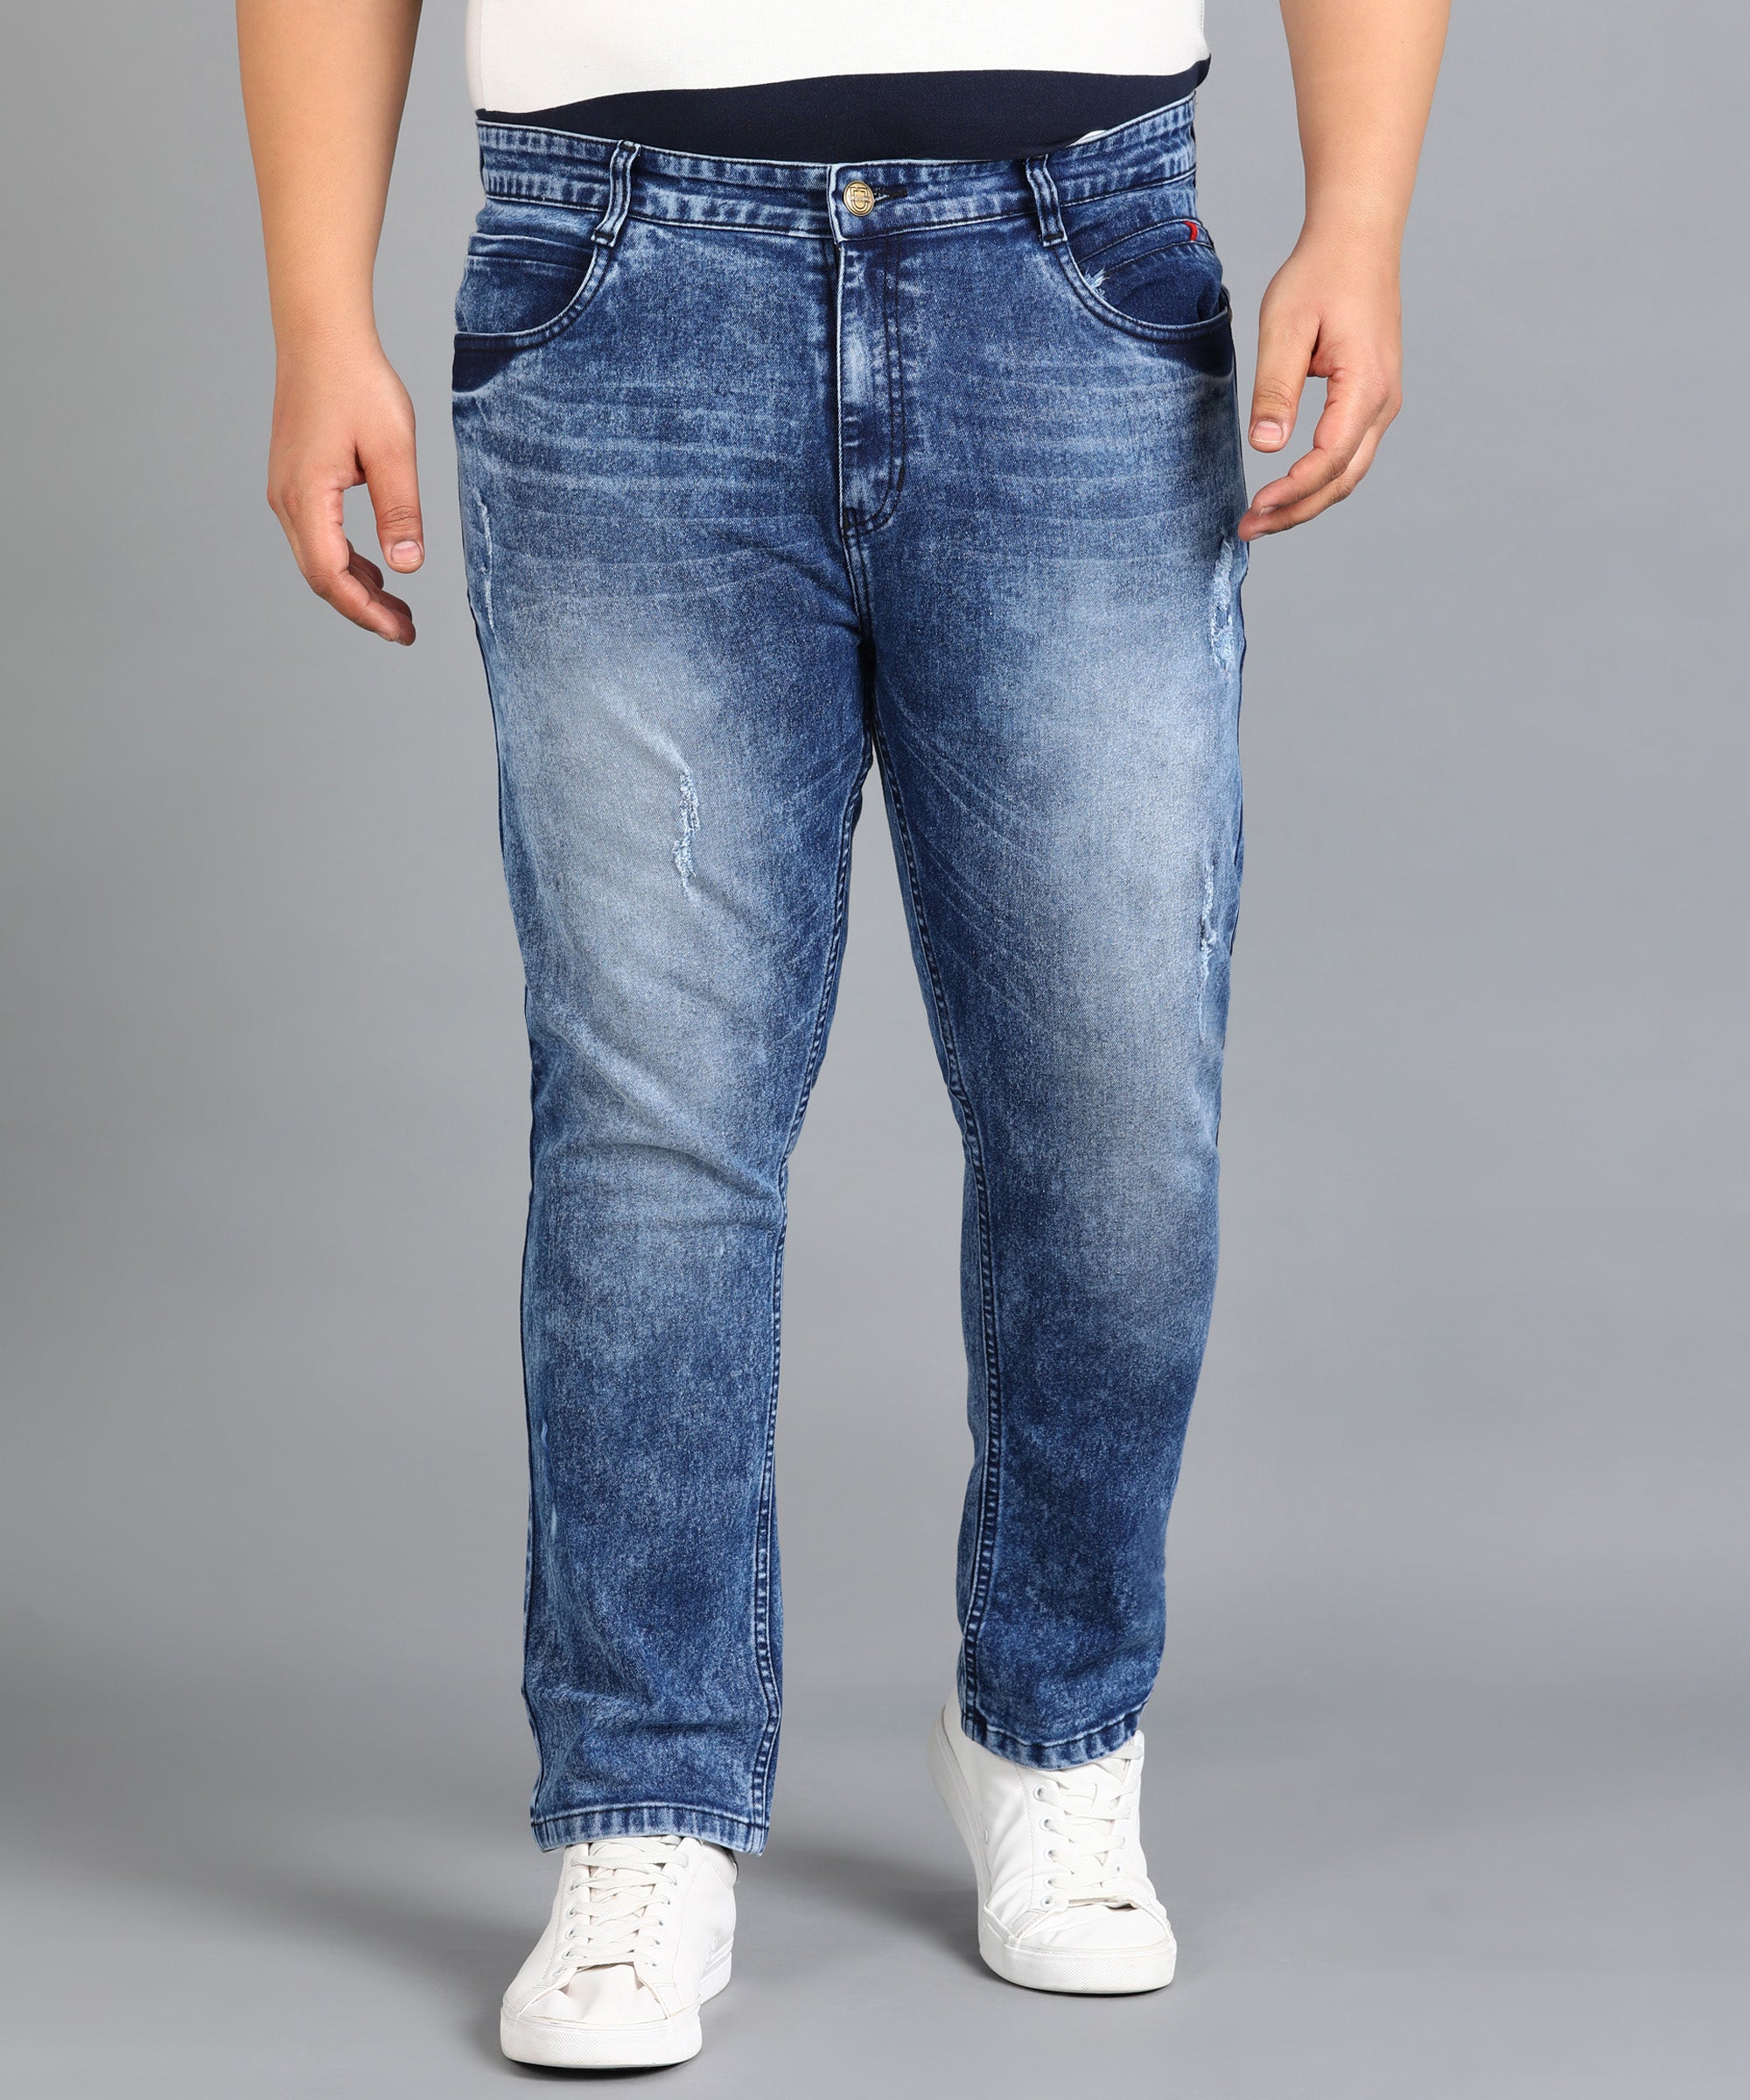 Urbano Plus Men's Navy Slim Fit Mild Distressed/Torn Jeans Stretchable